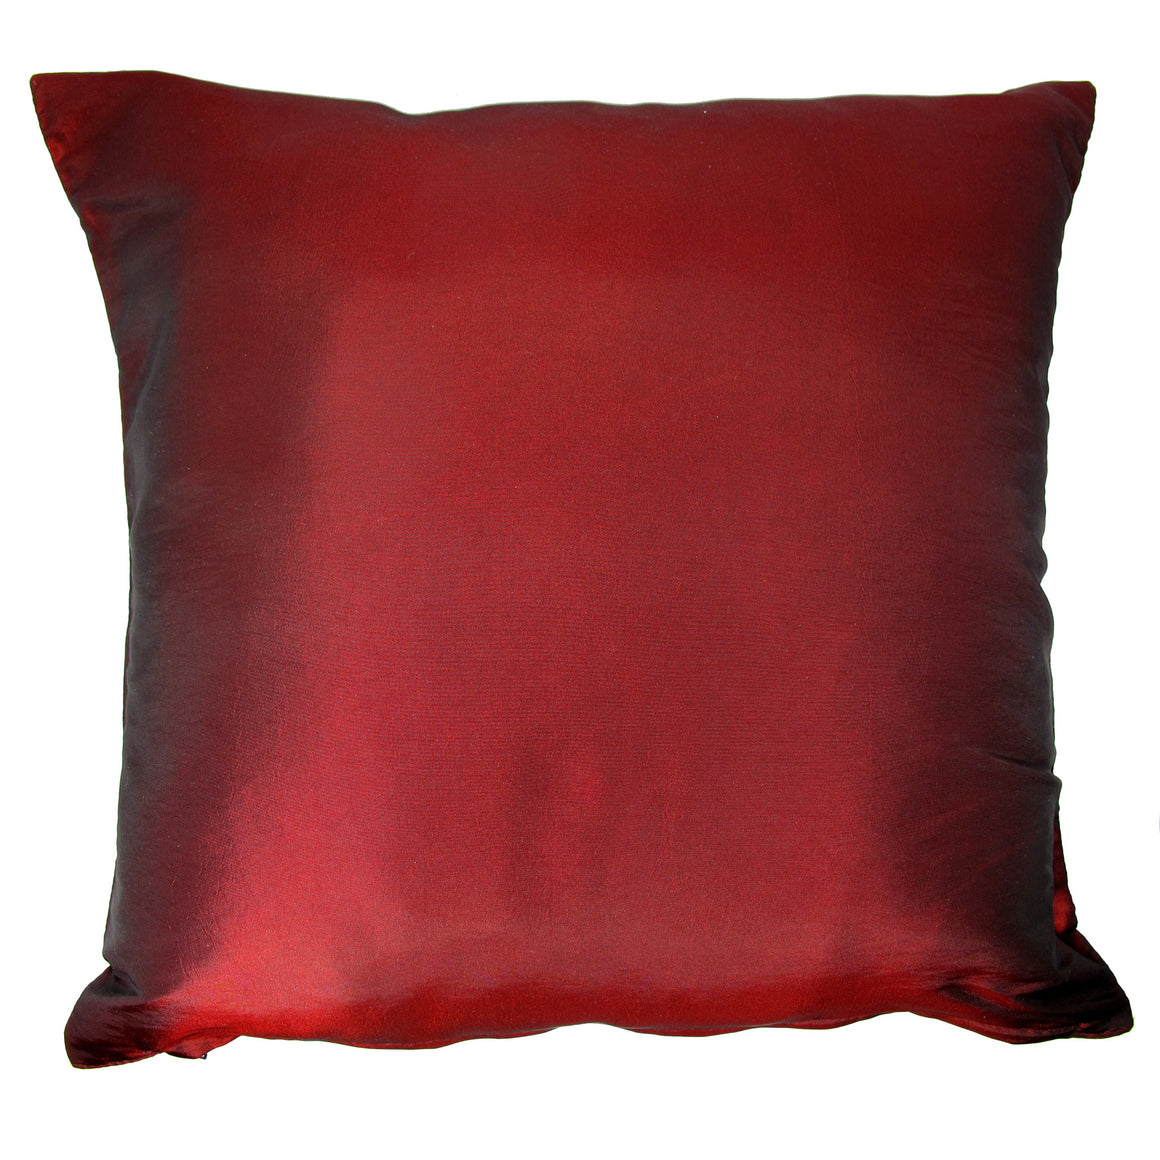 Thai Silk Throw Pillow Cover, Lotus Design, Red - TropicaZona